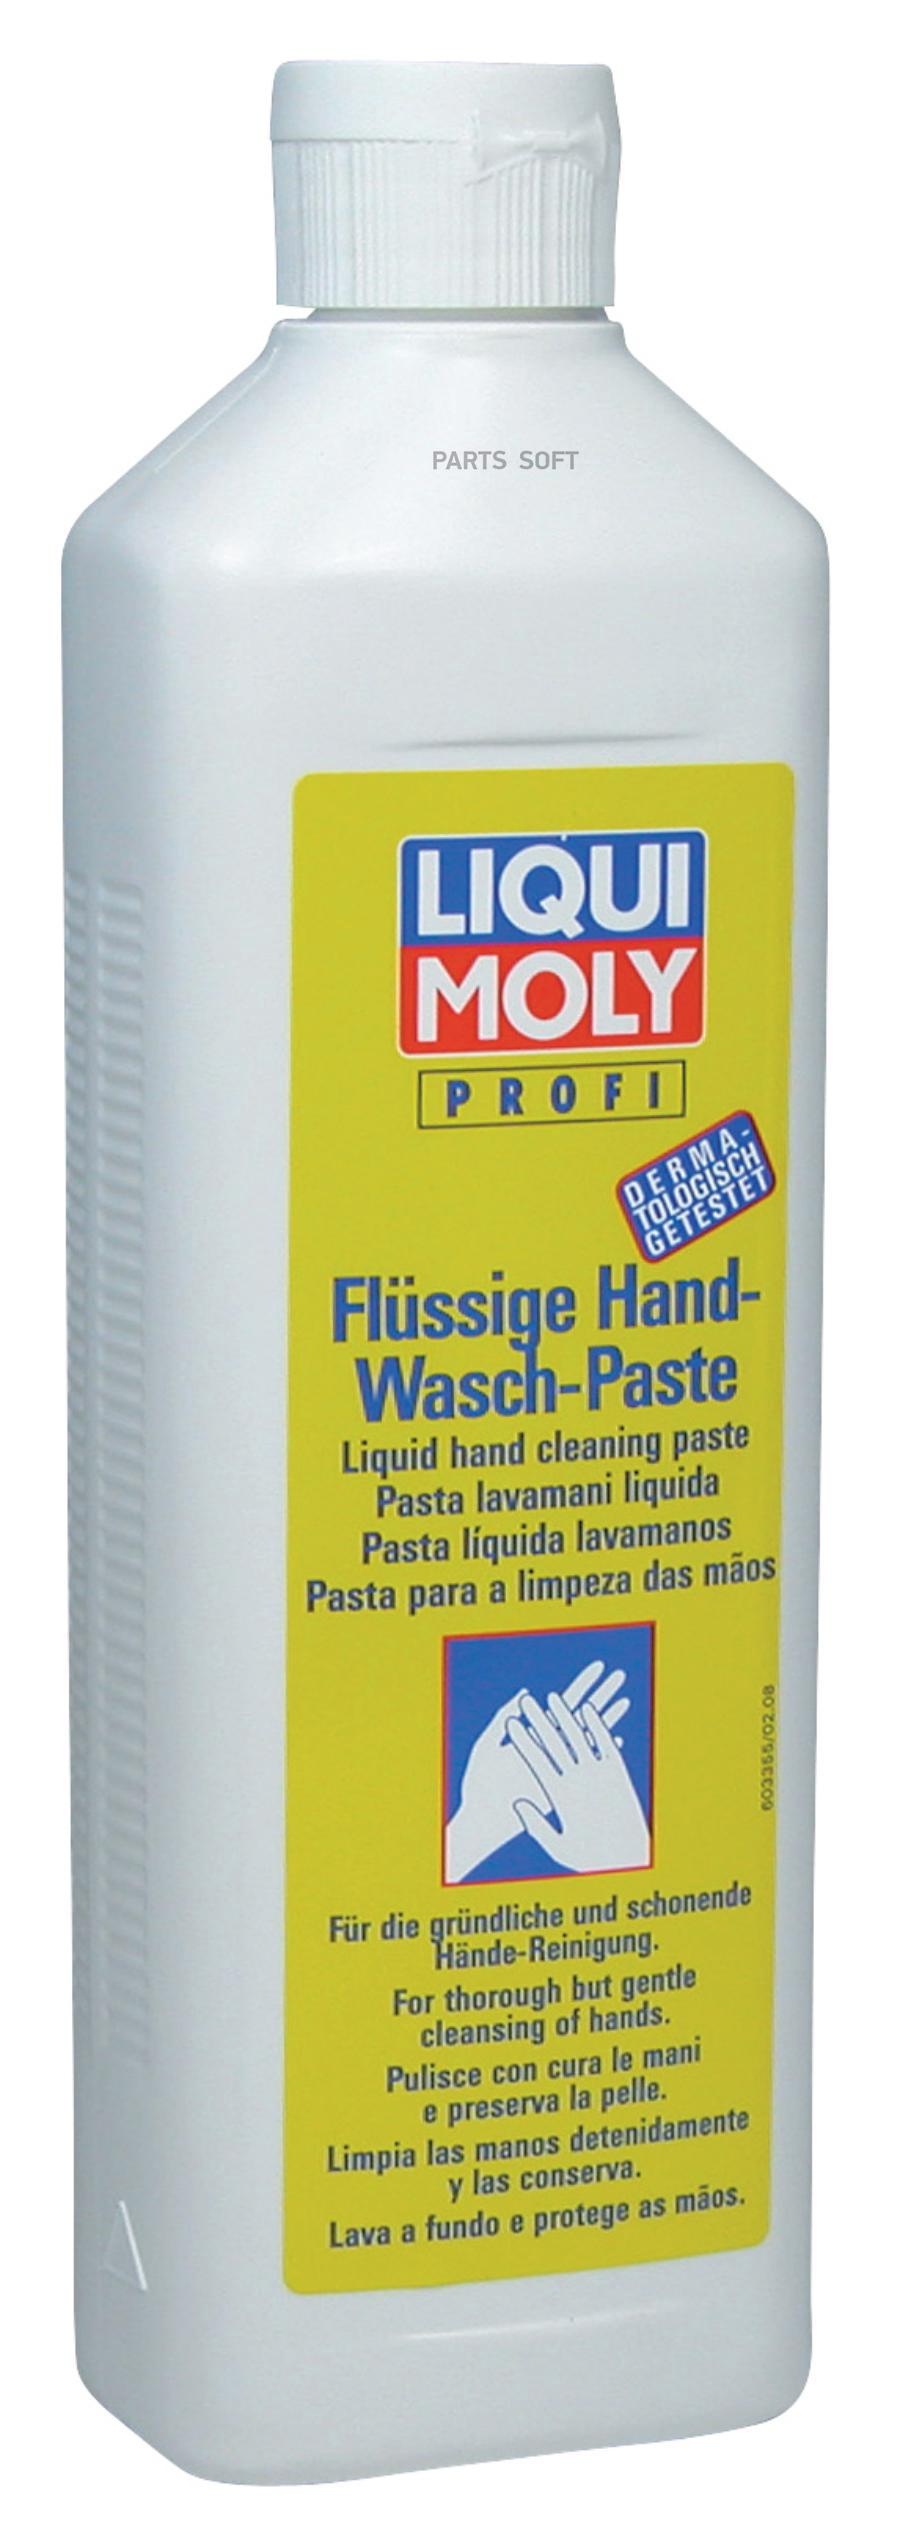 LIQUI MOLY LiquiMoly Flussige Hand-Wasch-Paste 0.5L_жидкая паста для очистки рук \